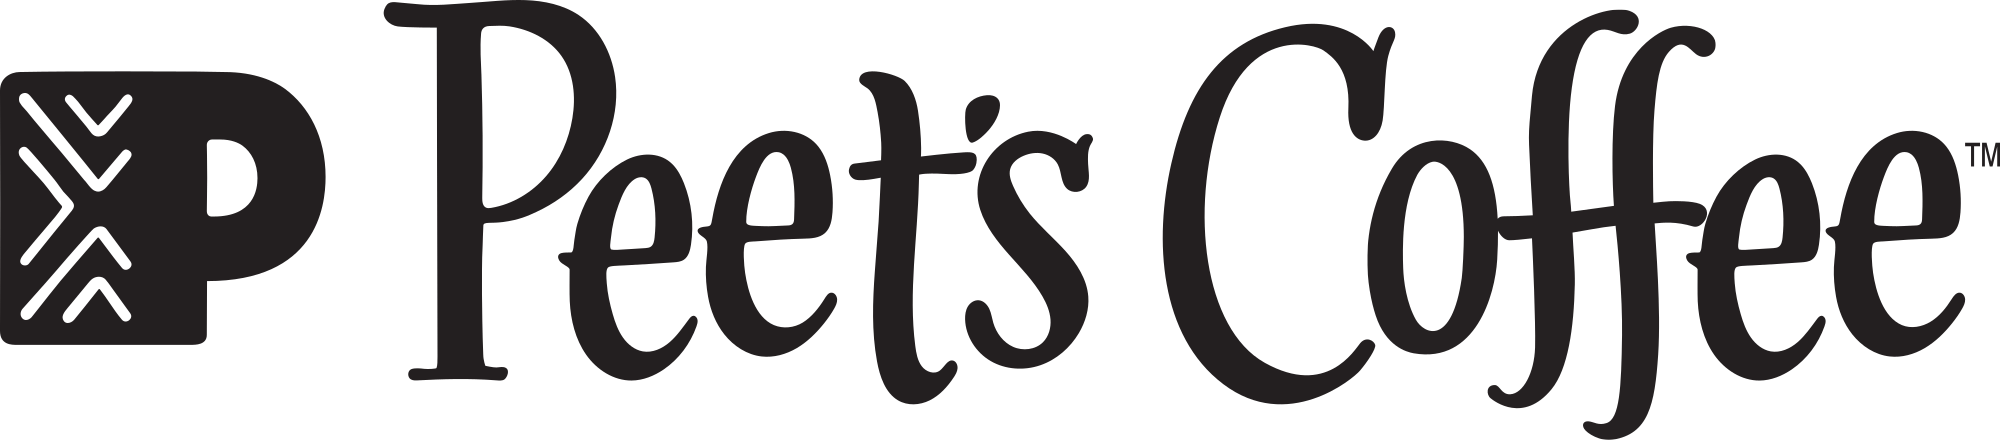 Peet's Coffee New Logo - Peet's Coffee logo.svg